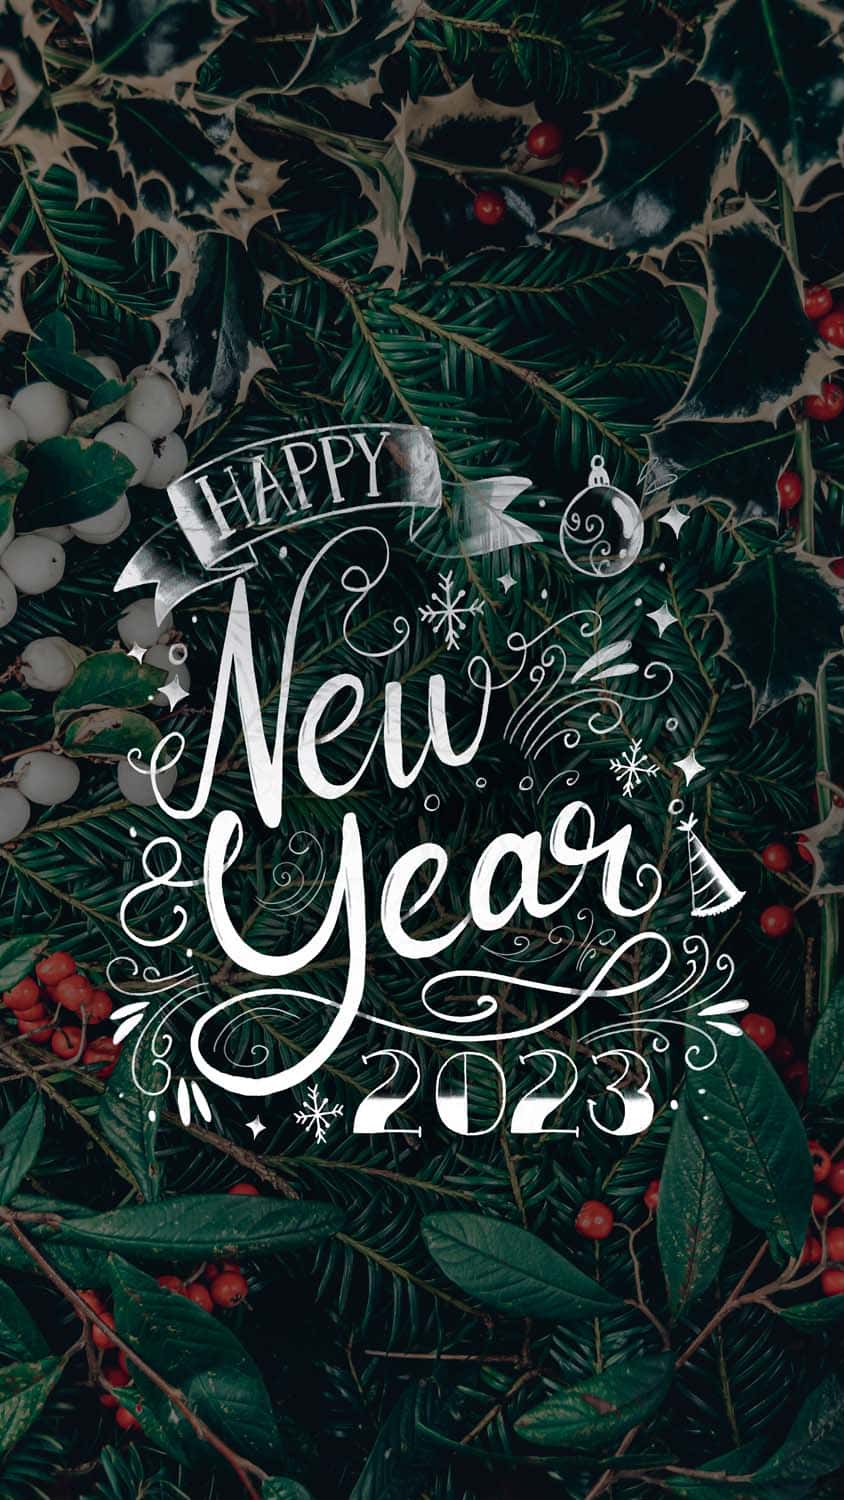 Happy New Year 2023 IPhone Wallpaper HD Wallpaper, iPhone Wallpaper